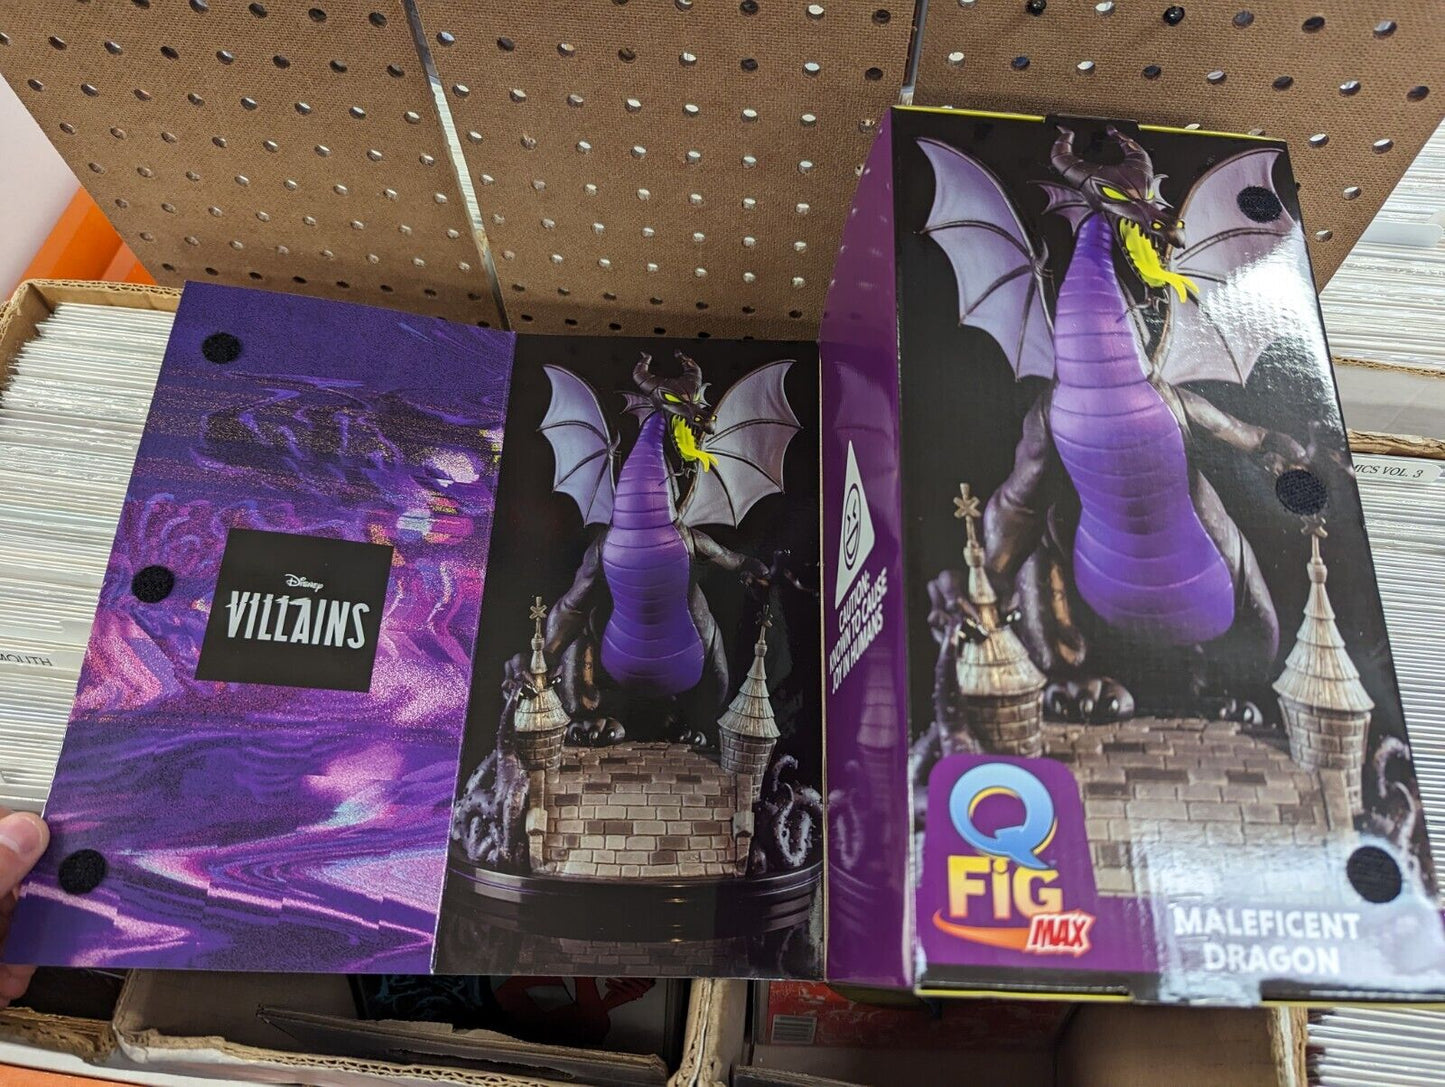 Disney Villains Maleficent Dragon Q Fig Max Statue